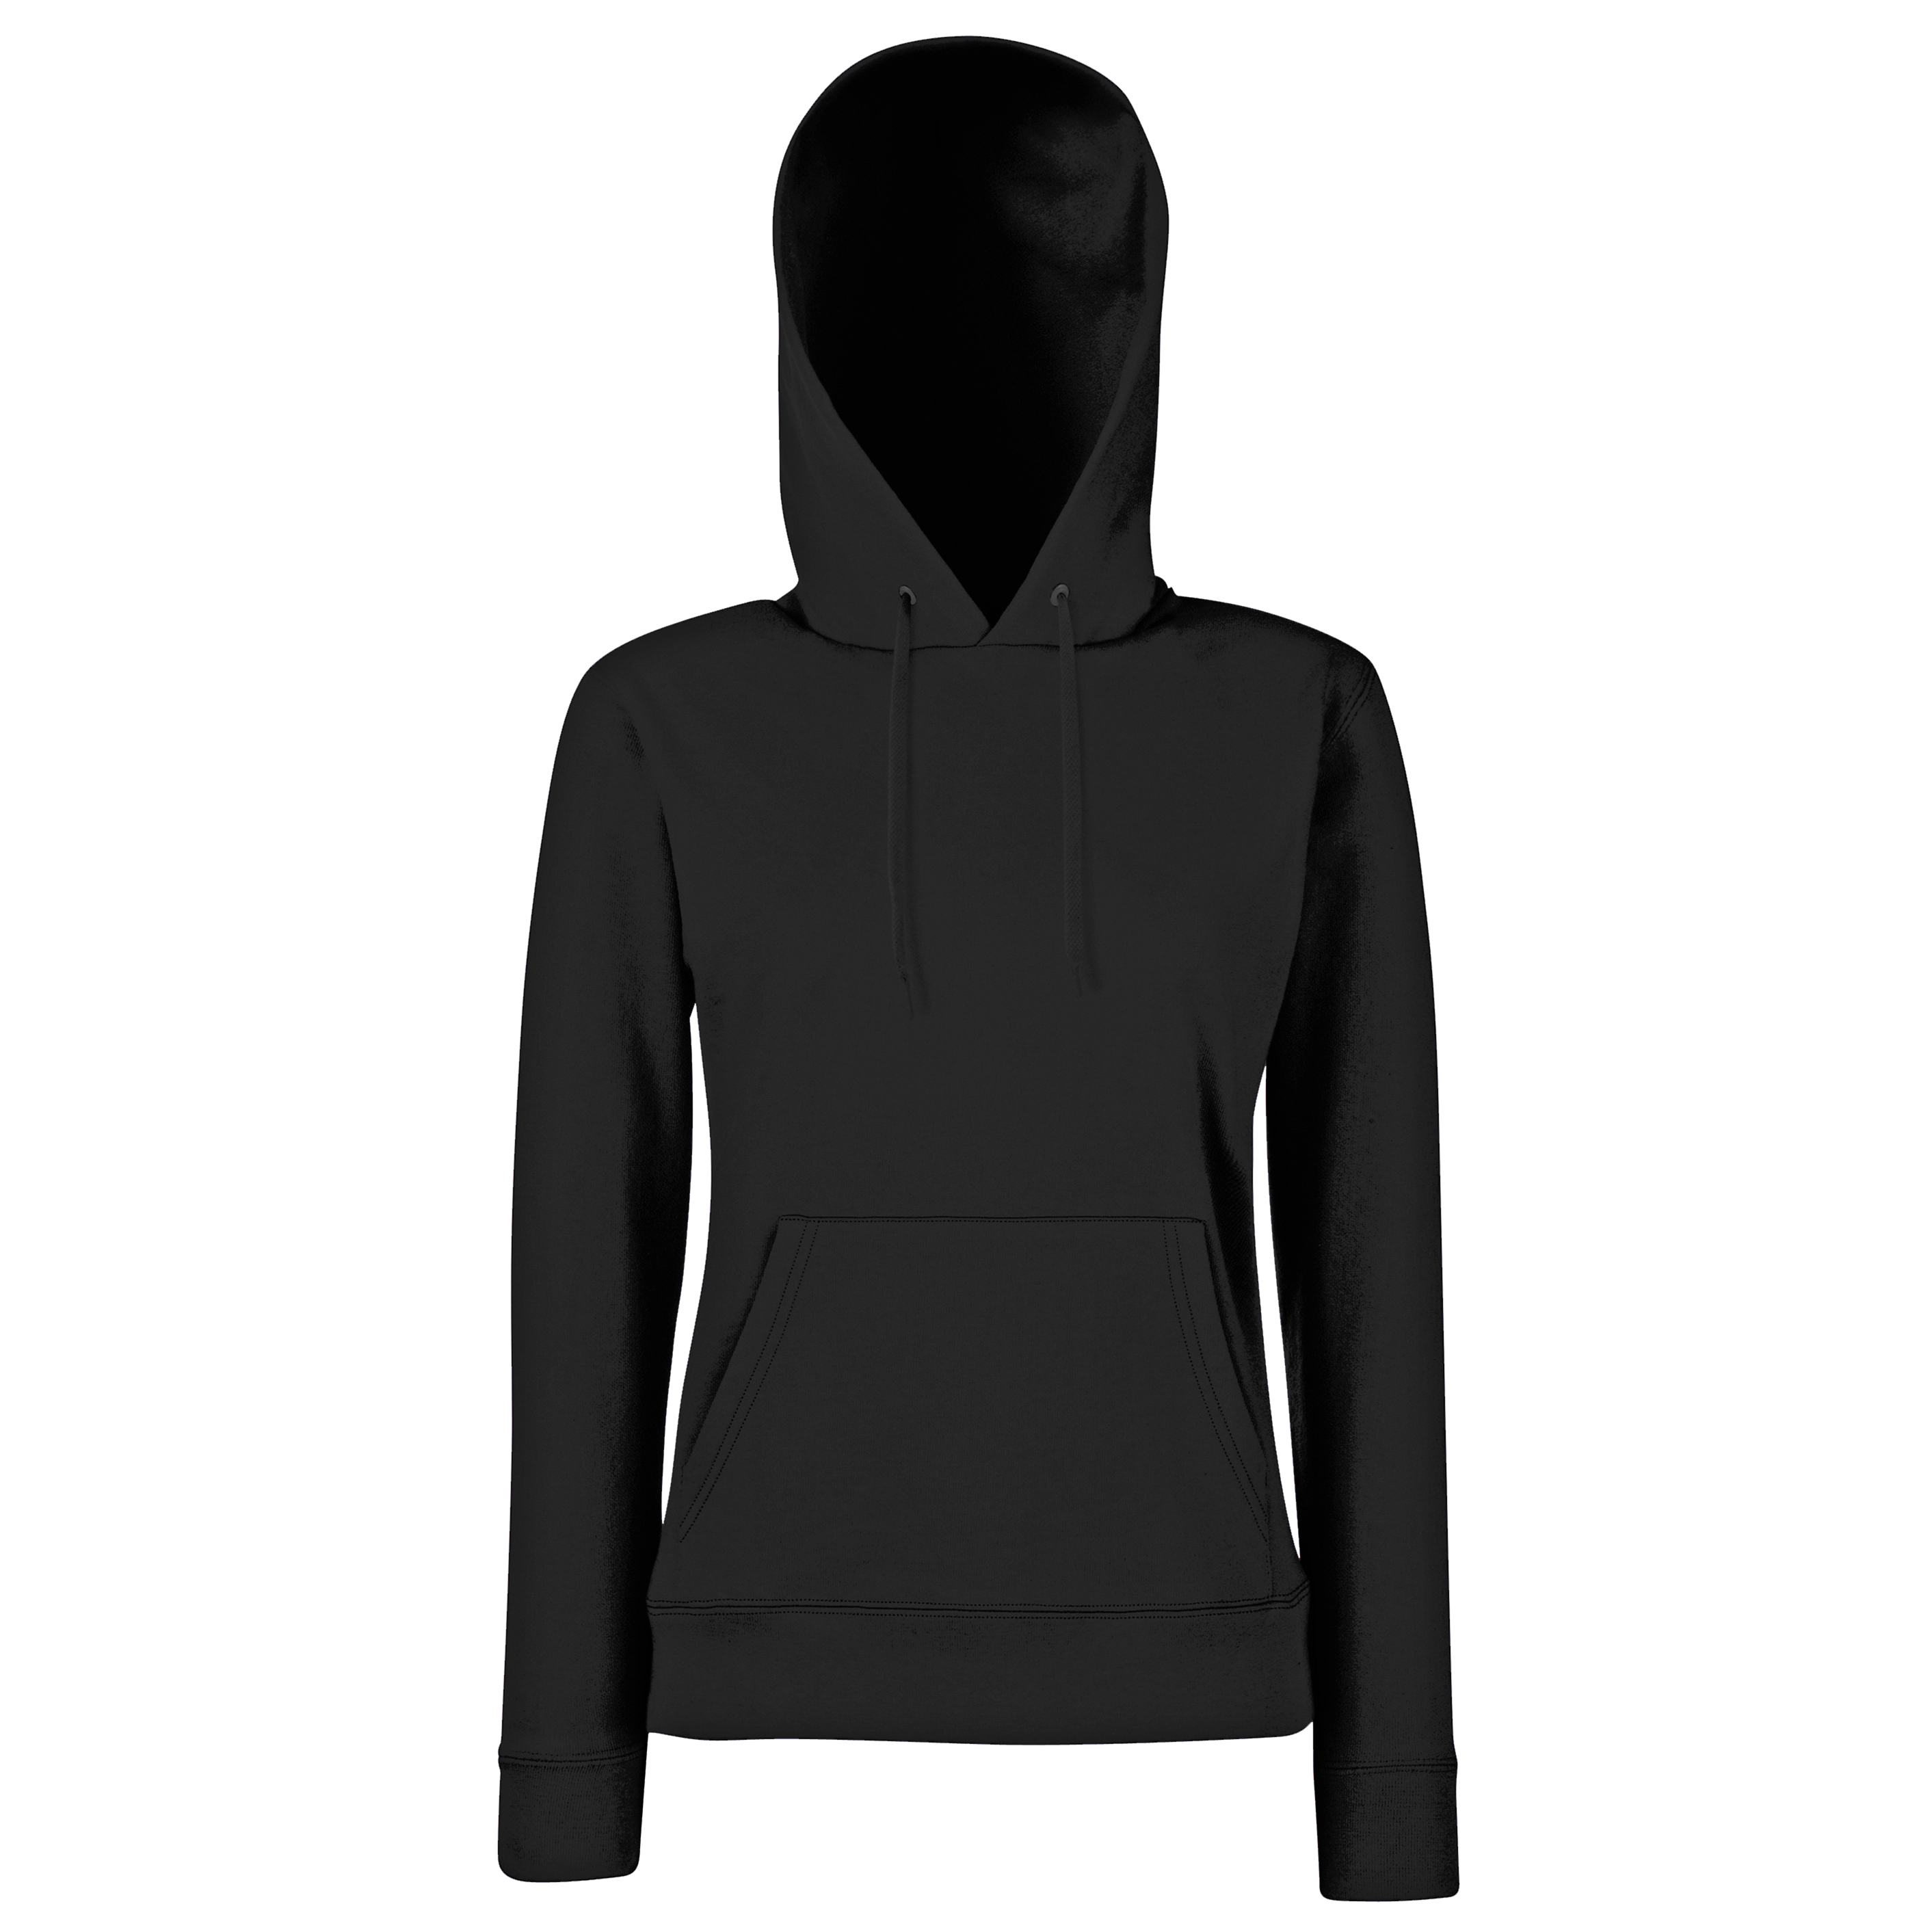 ax-httpswebsystems.s3.amazonaws.comtmp_for_downloadfruit-of-the-loom-womens-classic-80-20-hooded-sweatshirt-black.jpeg